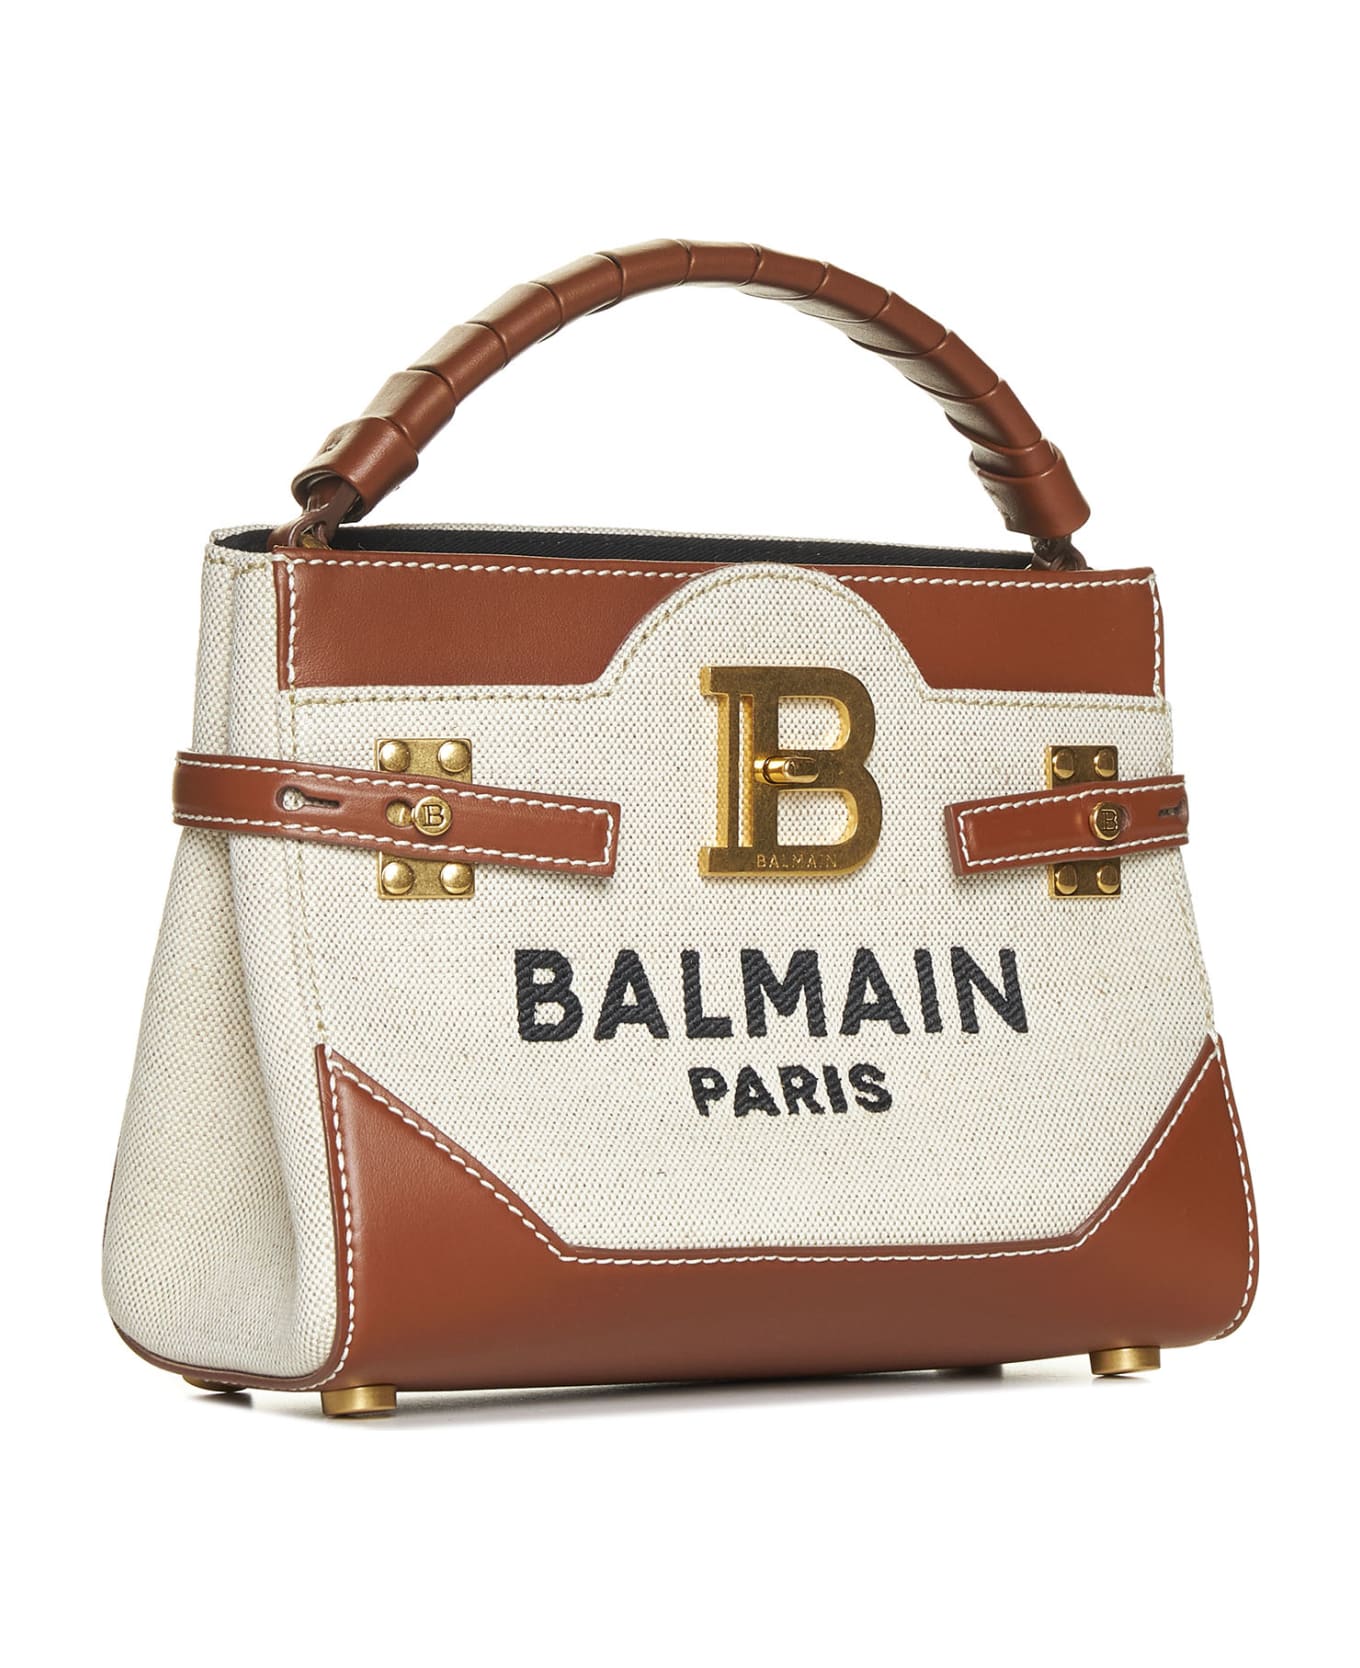 Balmain B-buzz 22 Top Handle Handbag - Naturel/marron トートバッグ